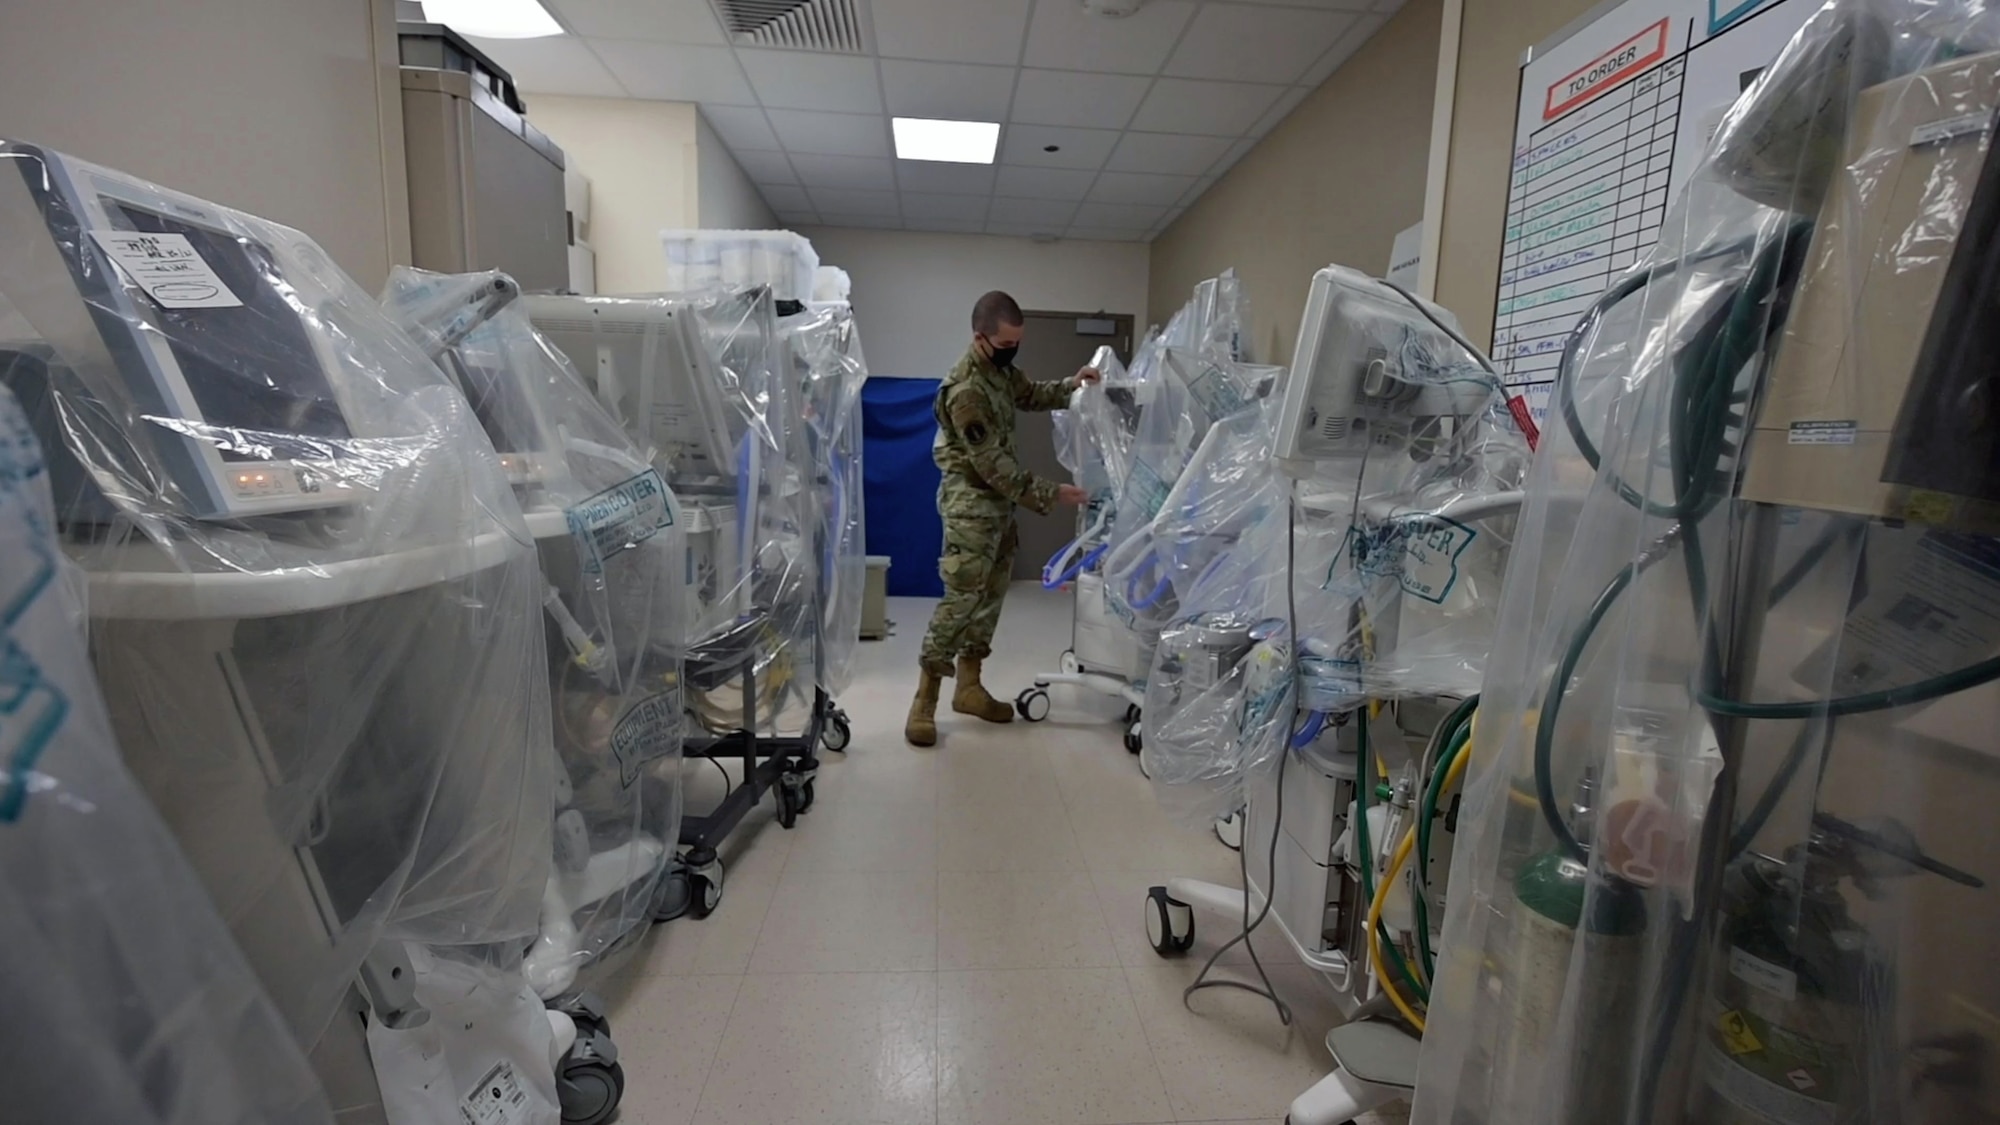 An Airmen walks through a row of ventilators covered in plastic.